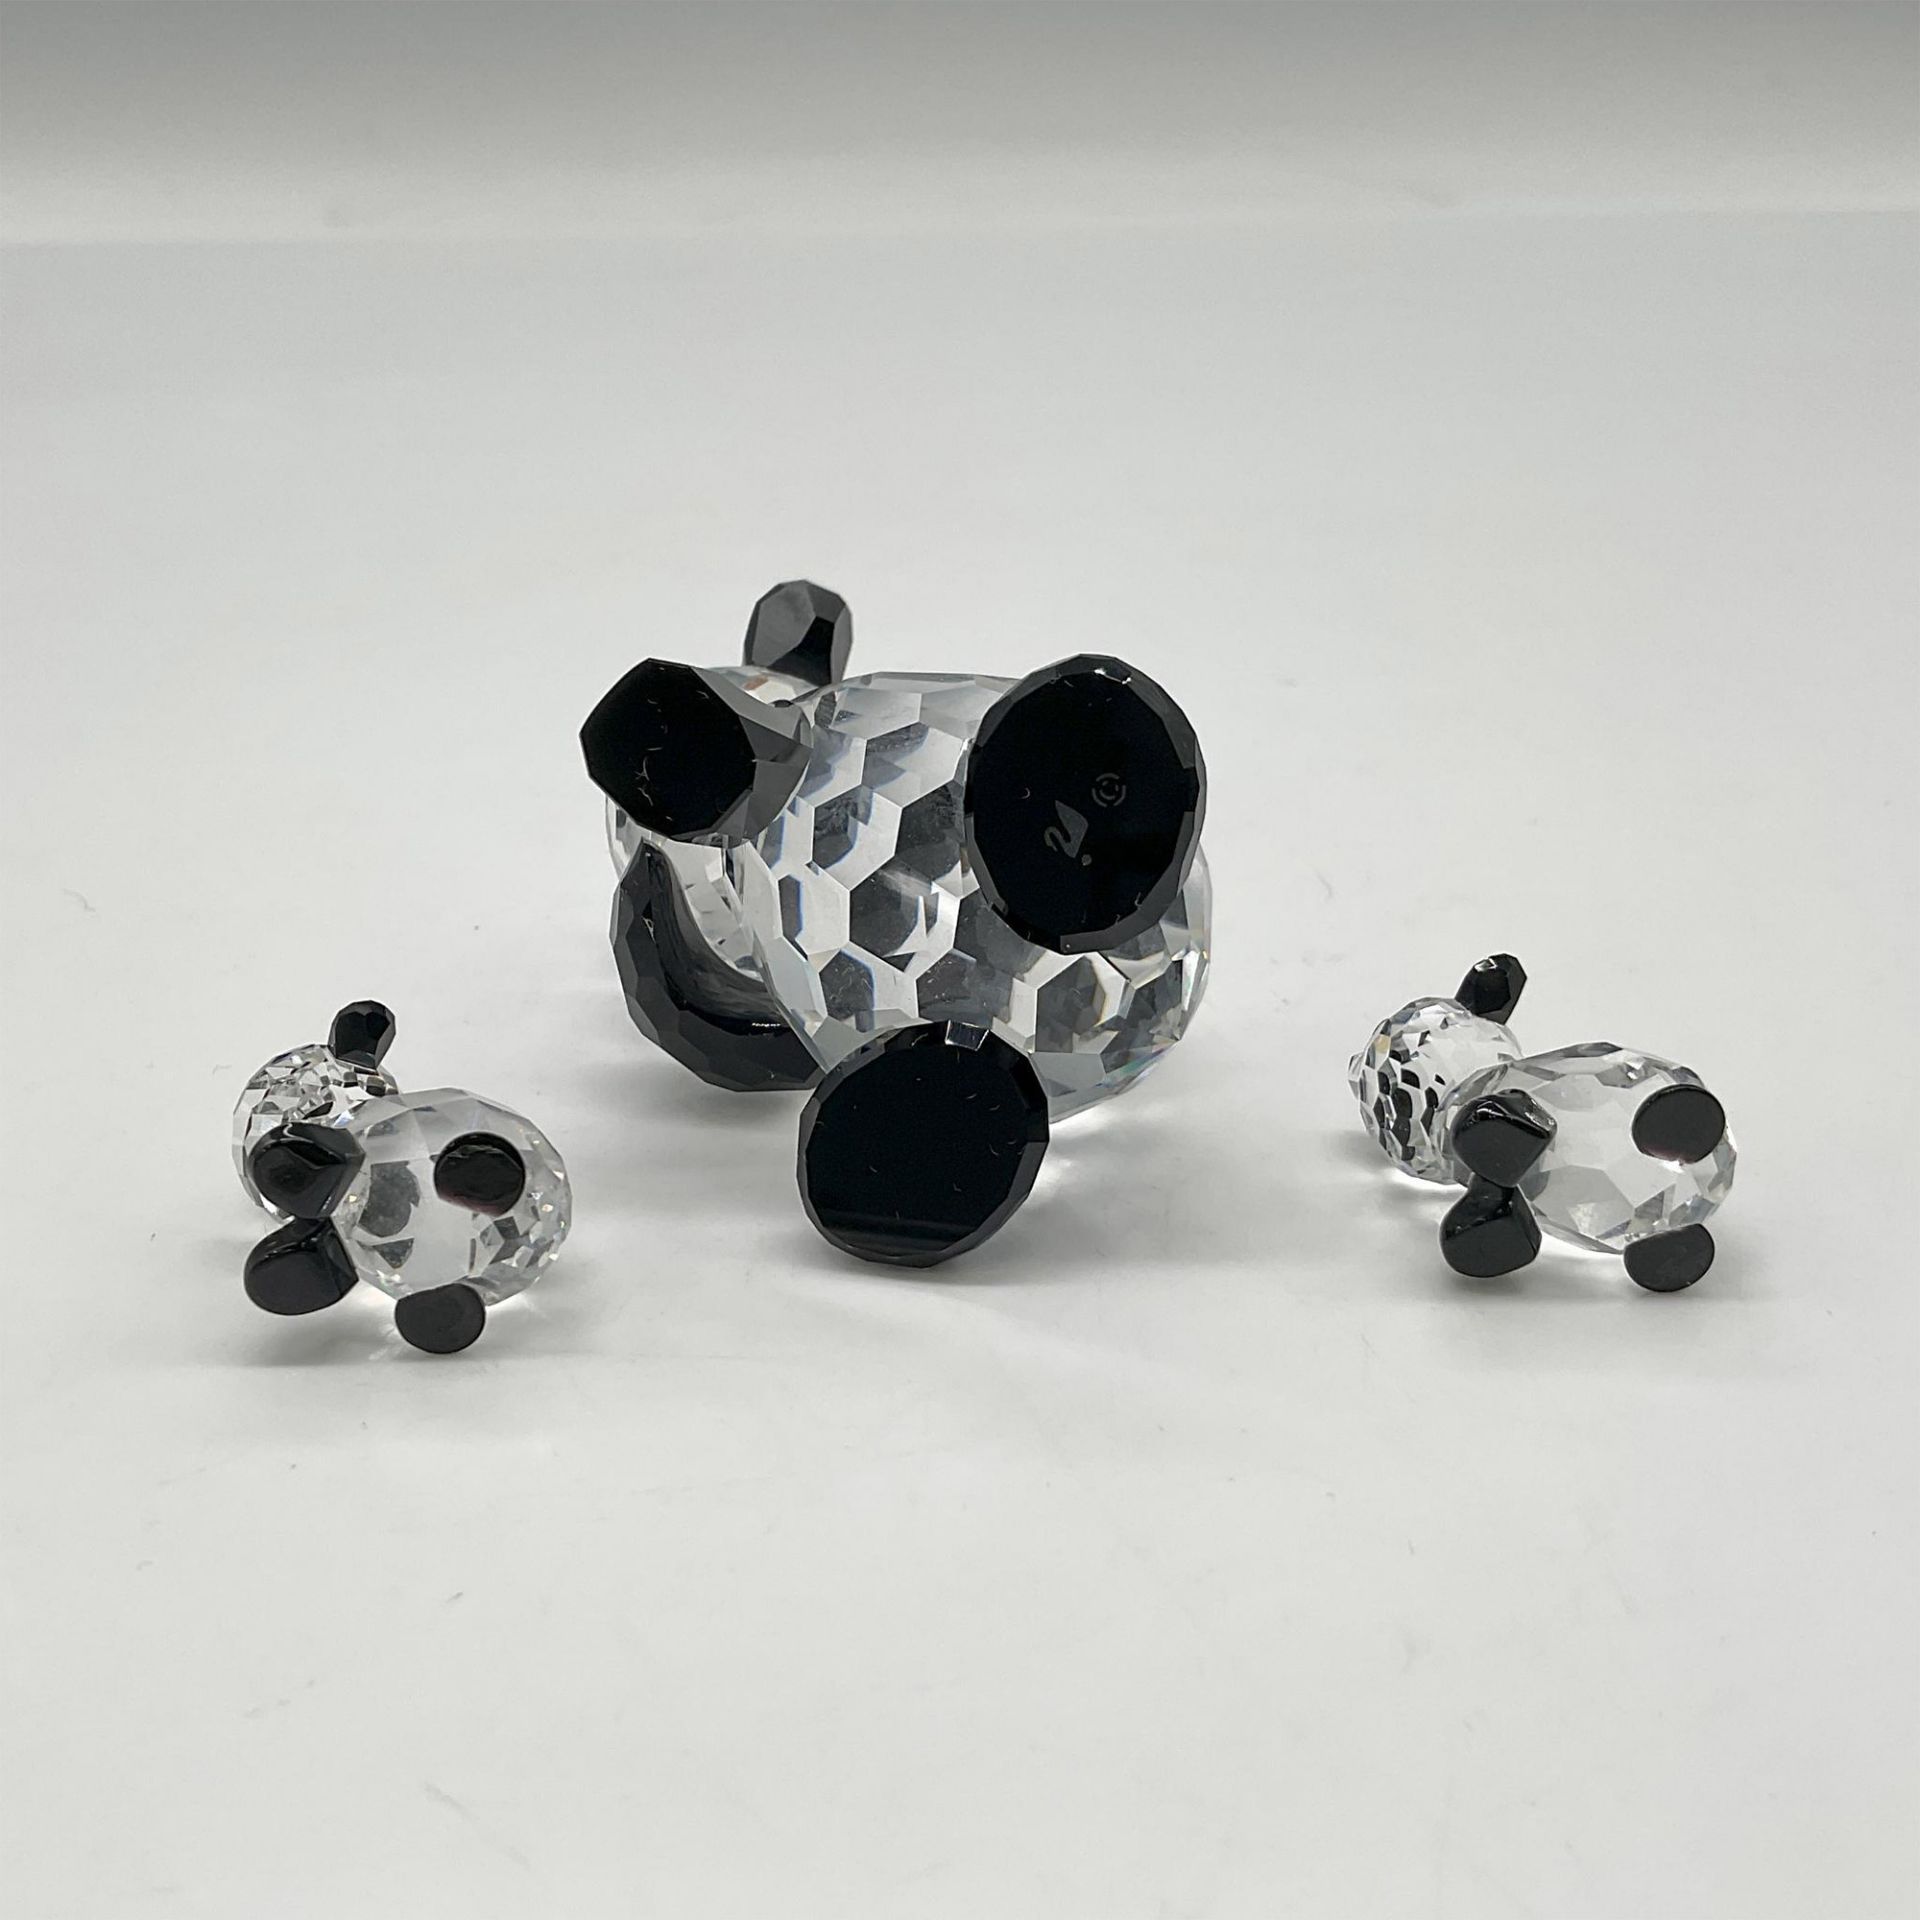 3pc Swarovski Crystal Figurines, Mother Panda and Babies - Image 3 of 3